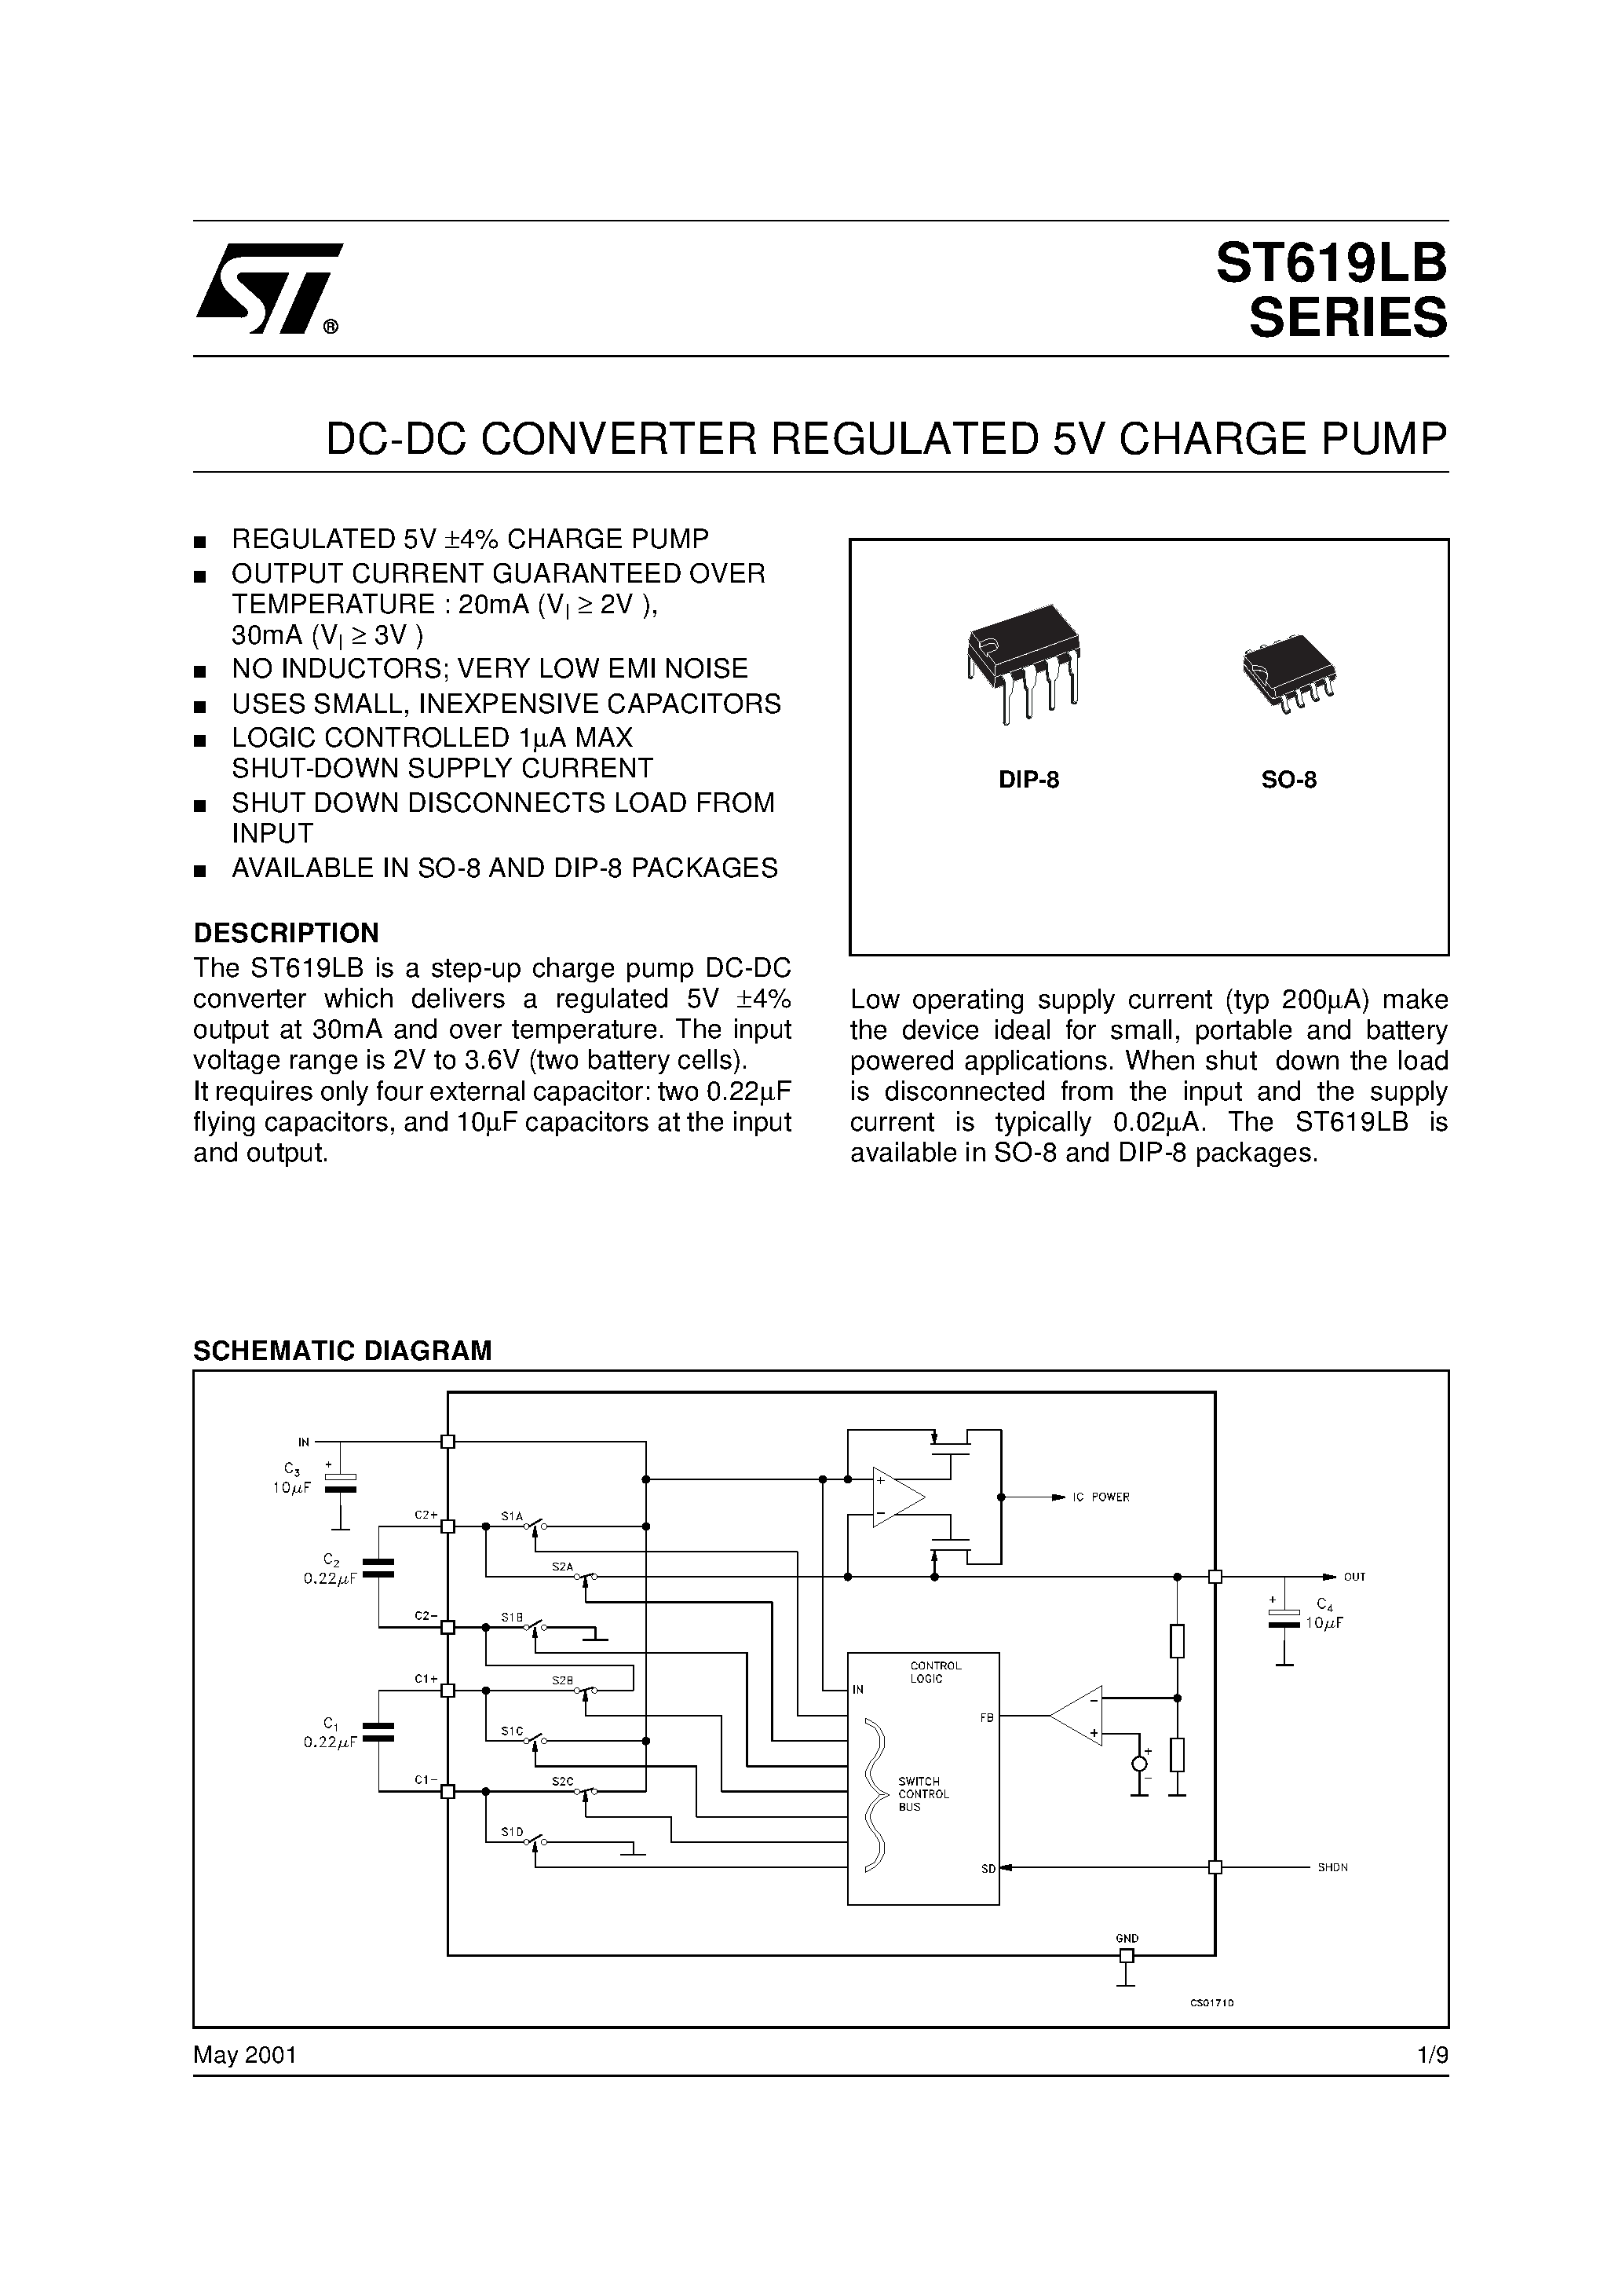 Datasheet ST619LB - DC-DC CONVERTER REGULATED 5V CHARGE PUMP page 1